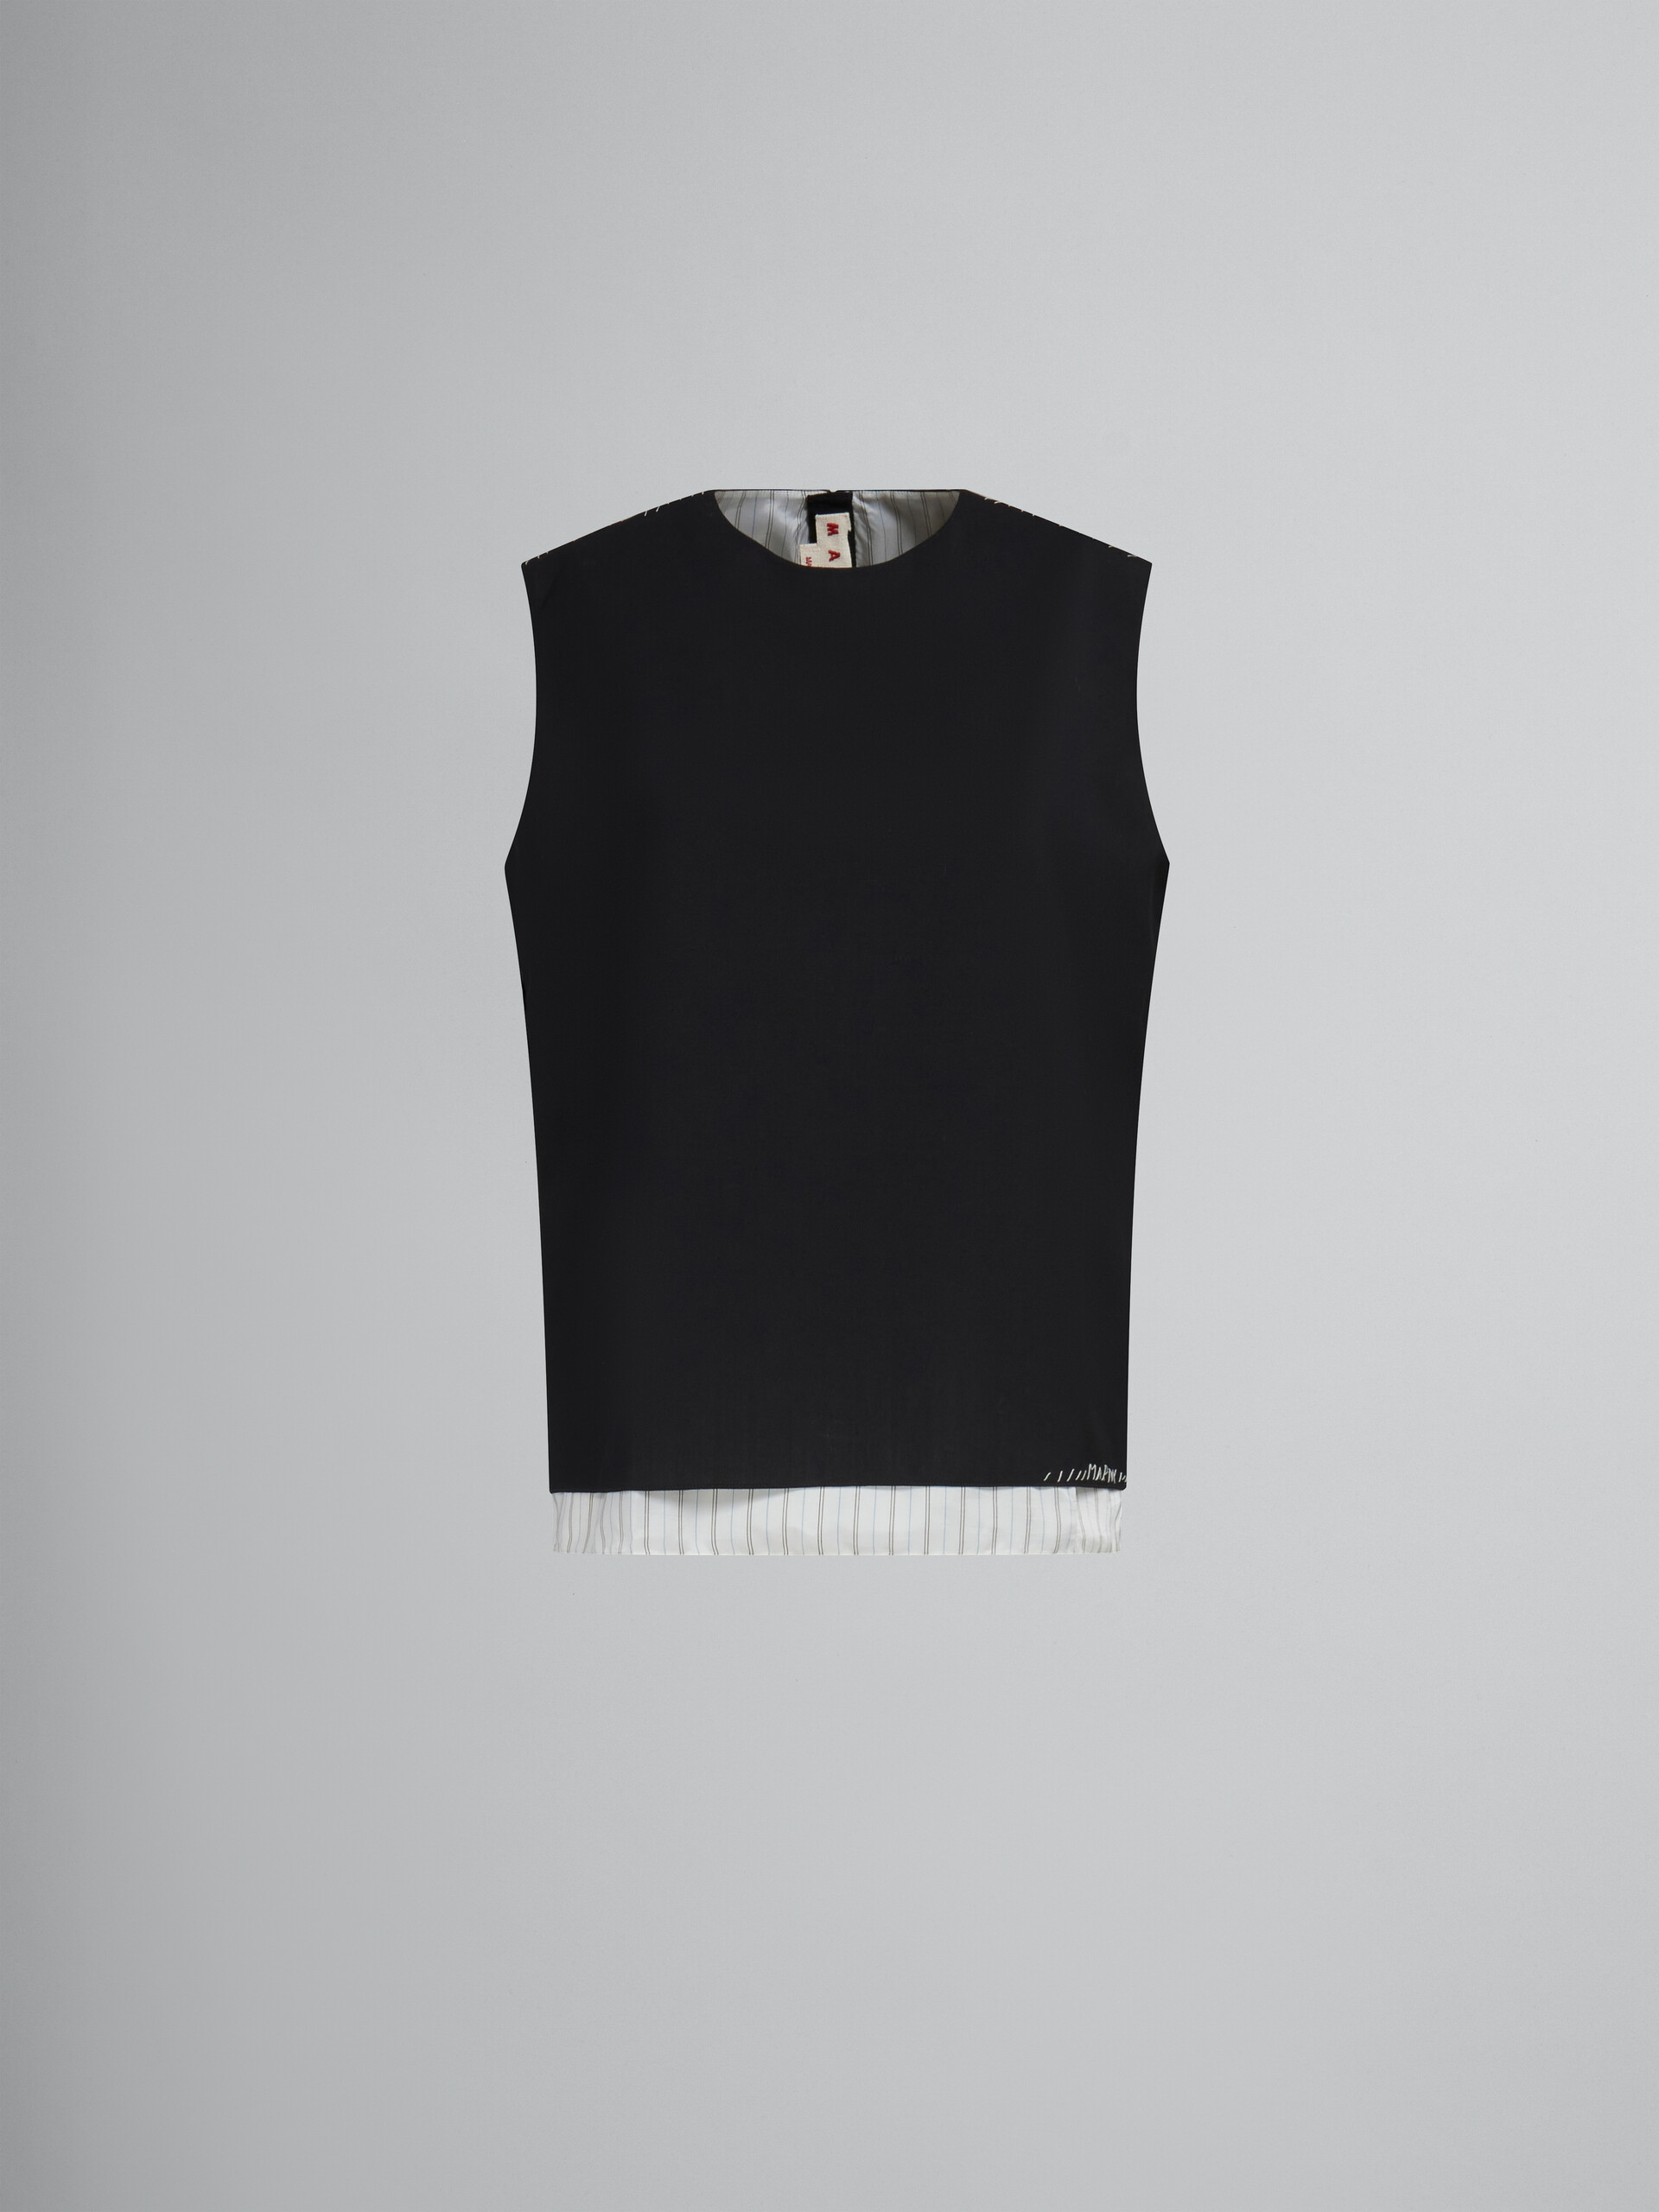 Black tropical wool sleeveless top with Marni mending - Shirts - Image 1